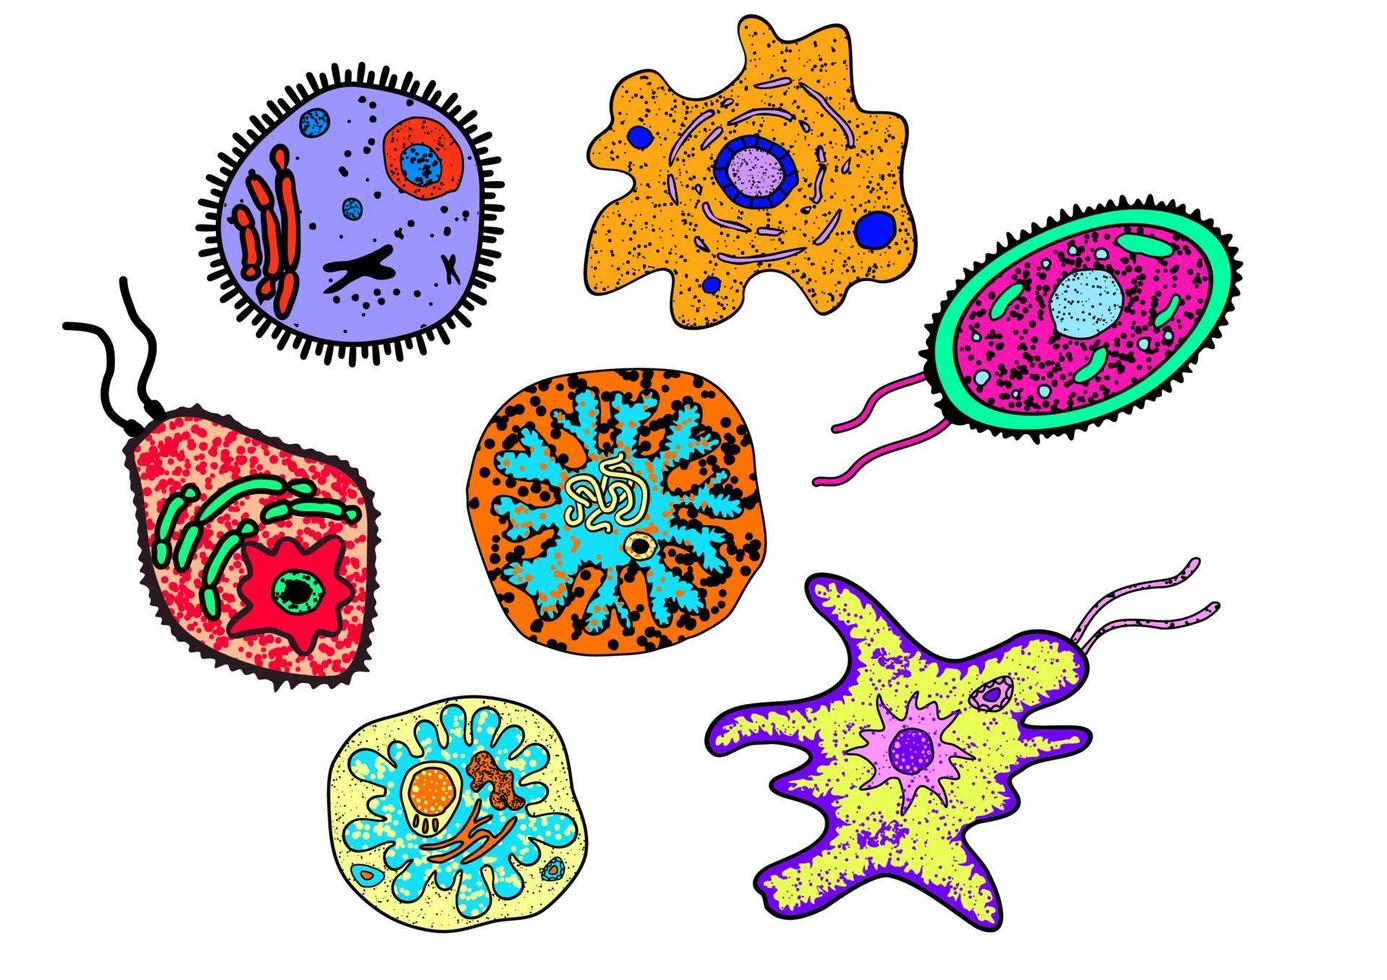 Cartoon-Amöben, Keime oder mikrobielle Lebensformen vektor